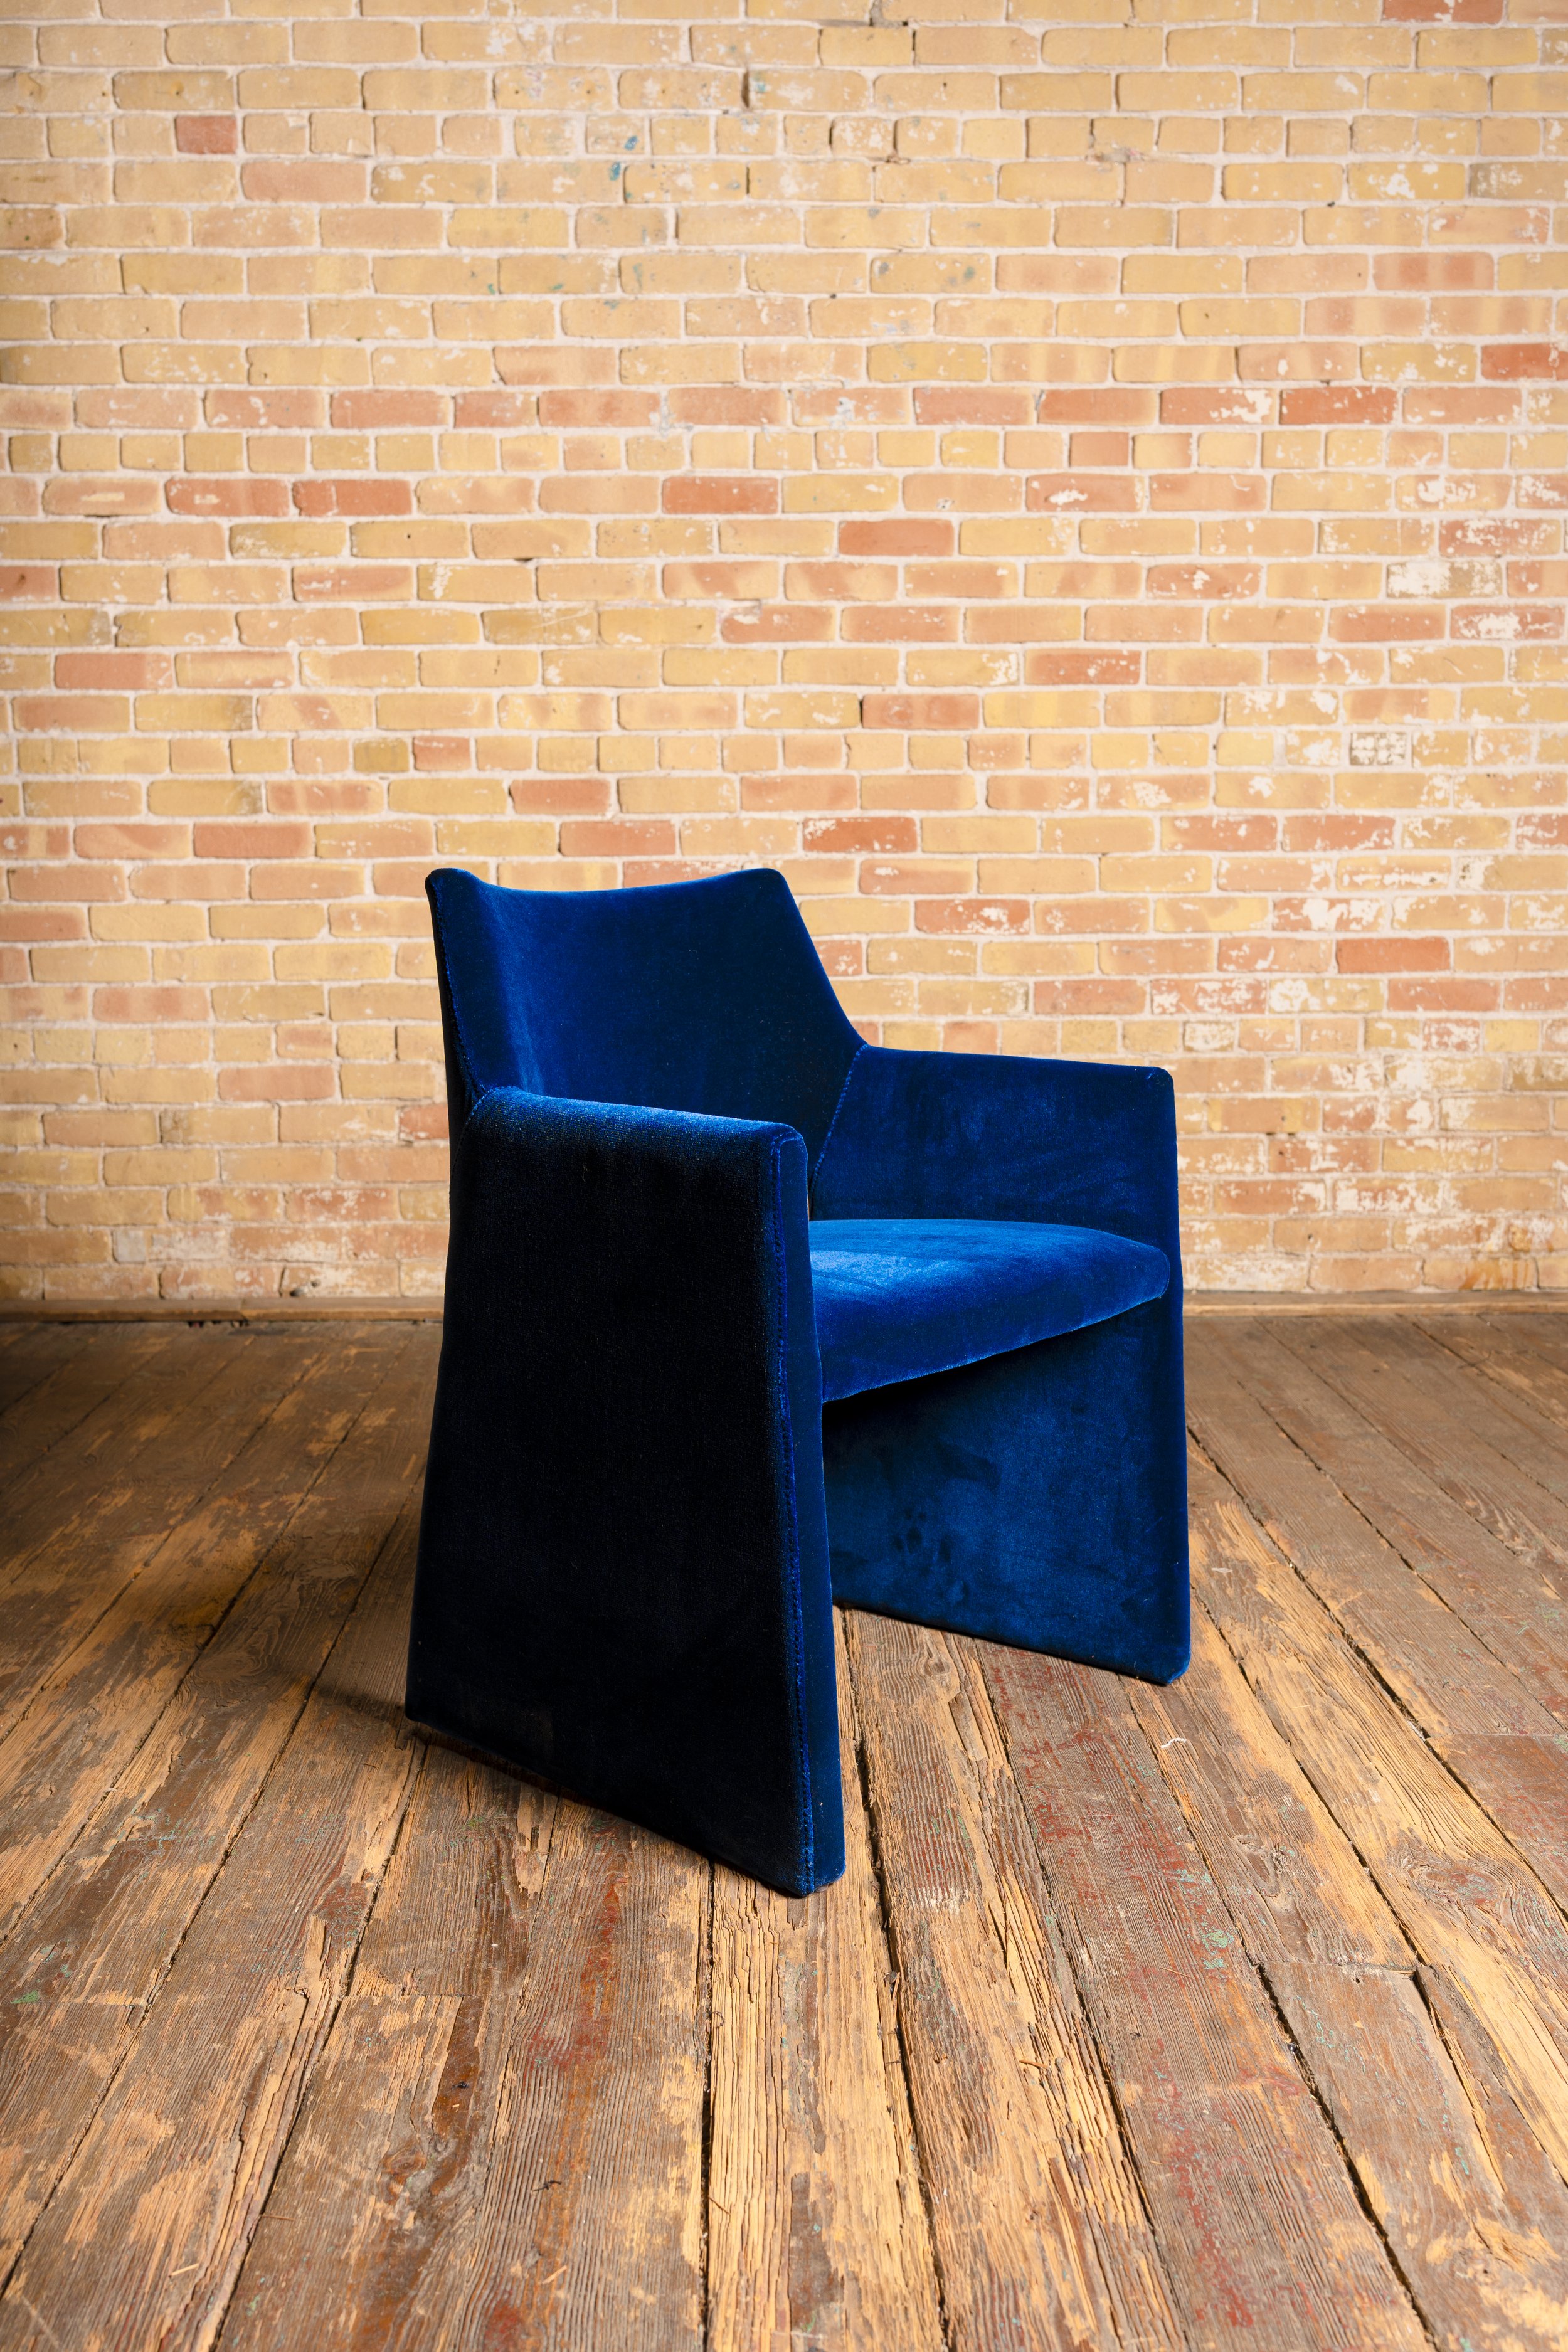 Blue Chair Side.jpg